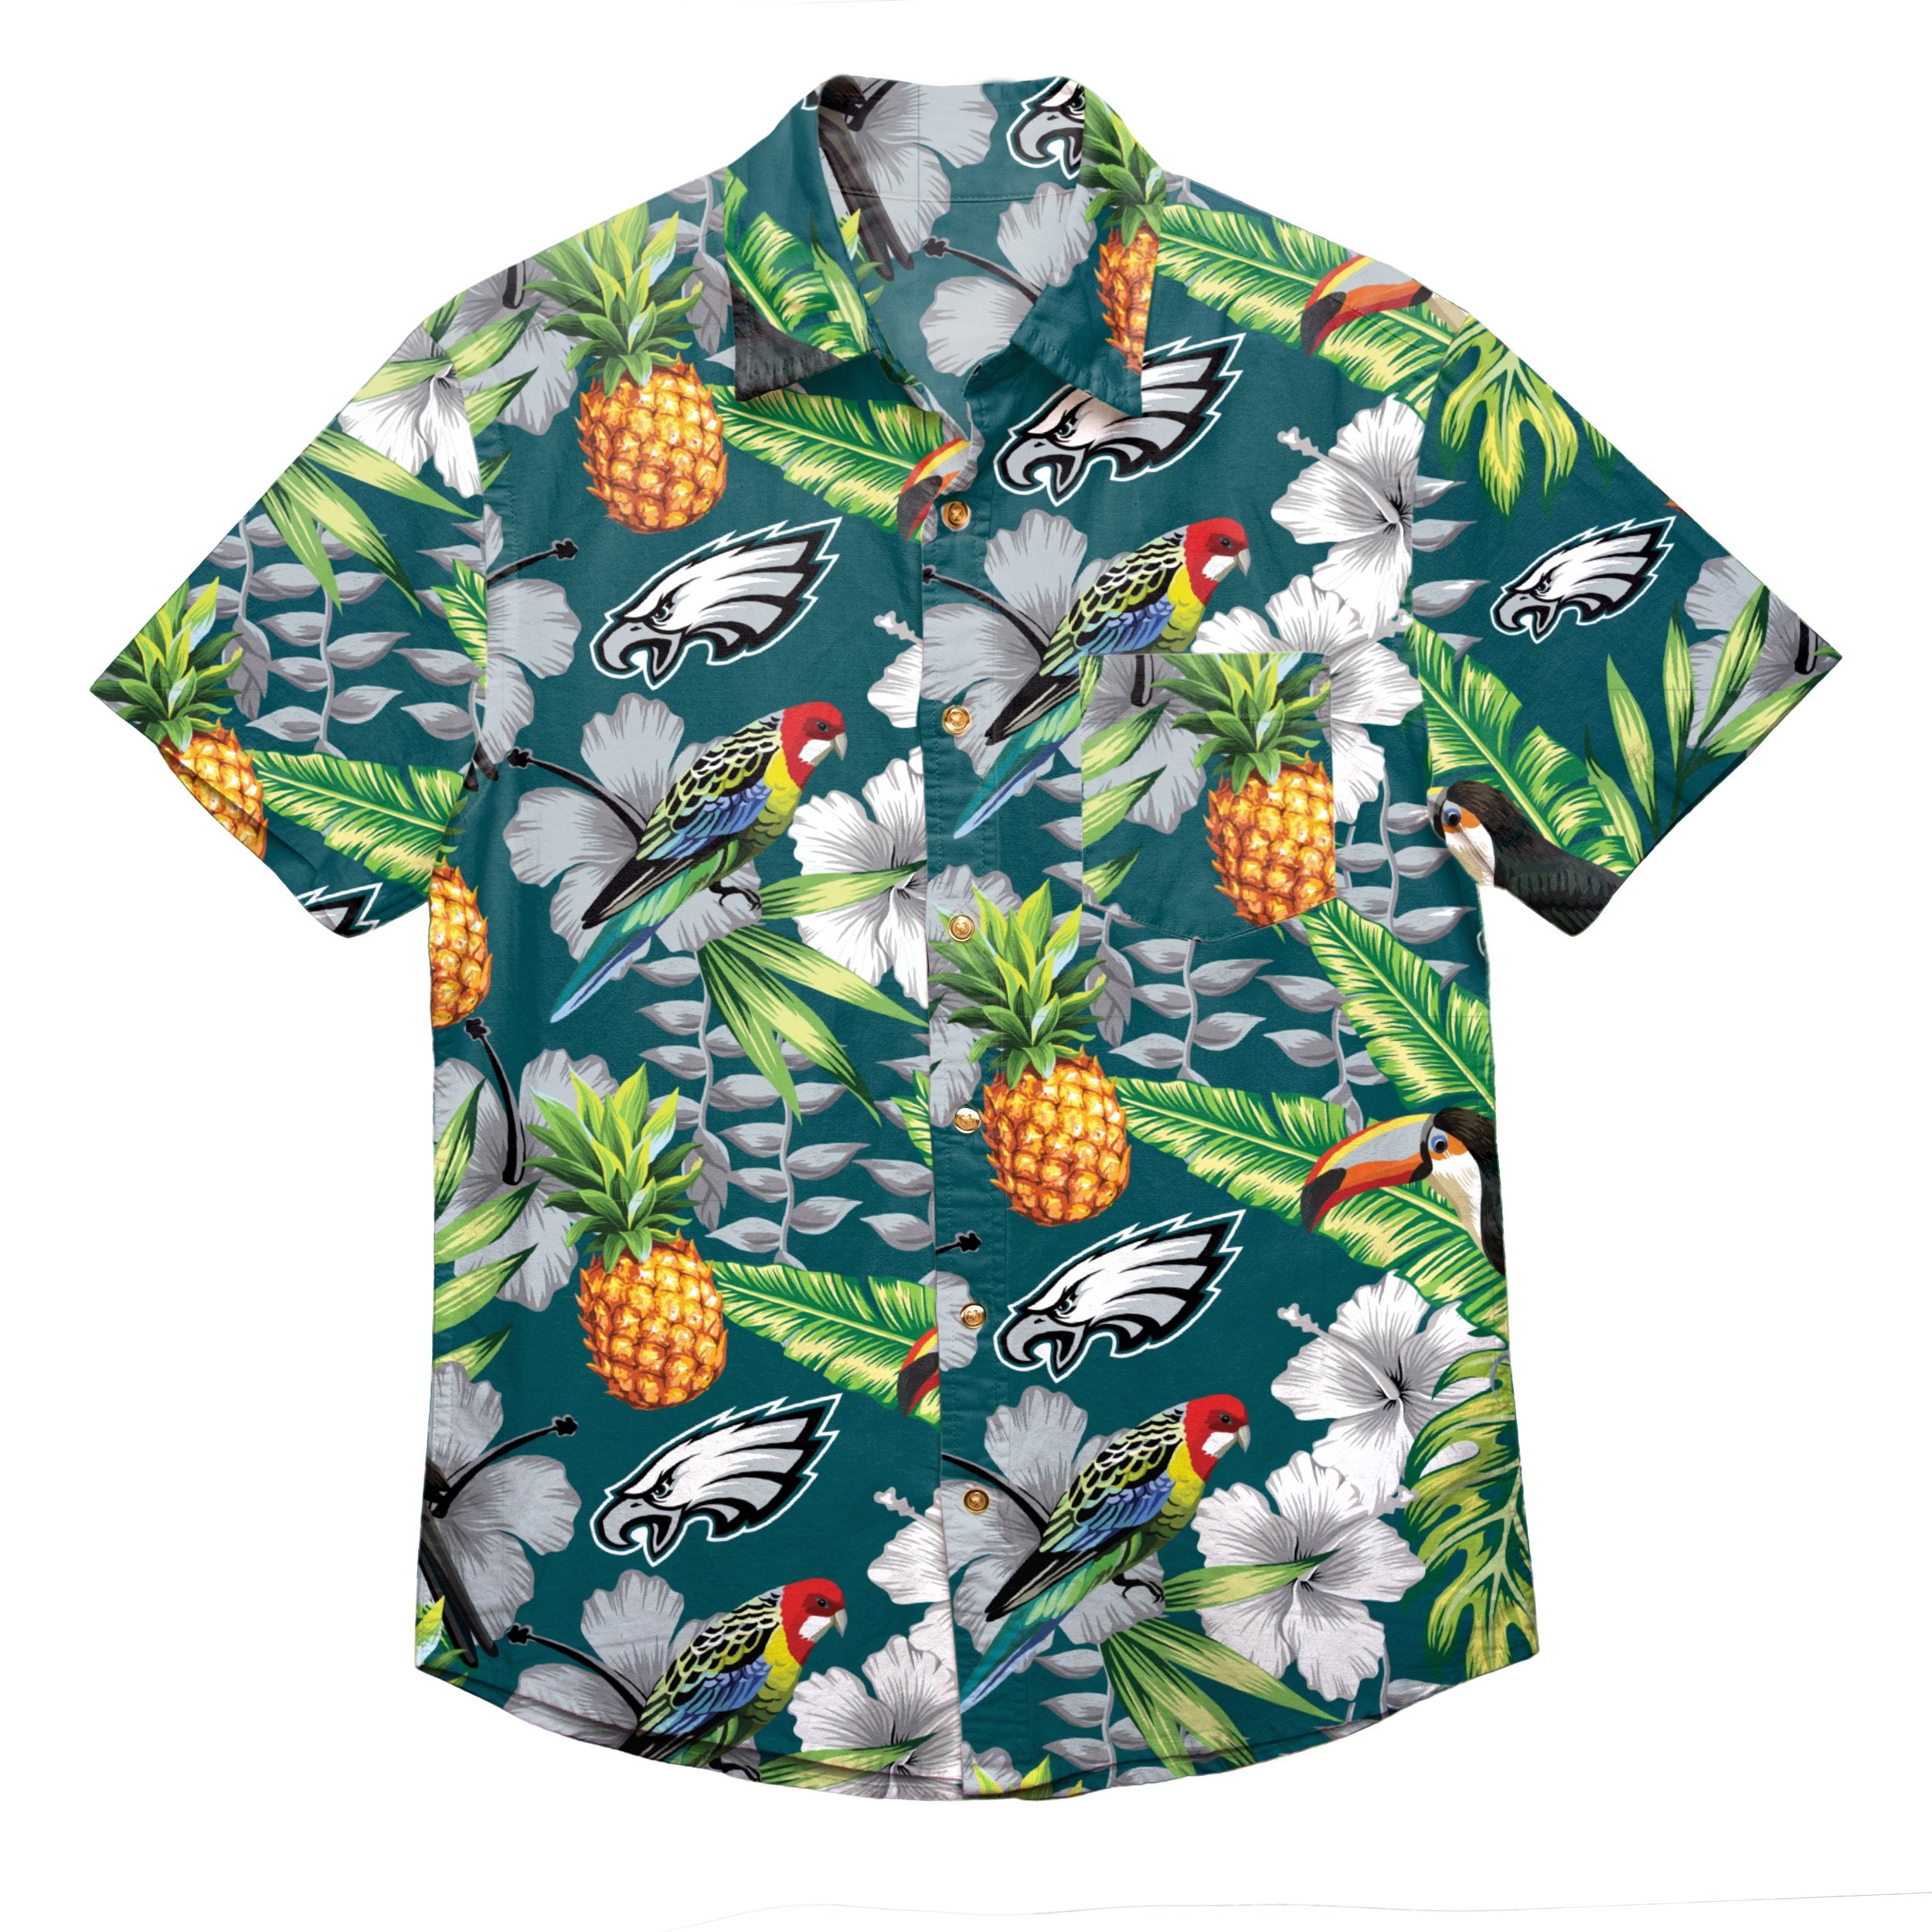 Philadelphia Eagles NFL Custom Name Funny Surfing Habicus Coconut Tree  Aloha Hawaiian Shirt For Men And Women - Banantees